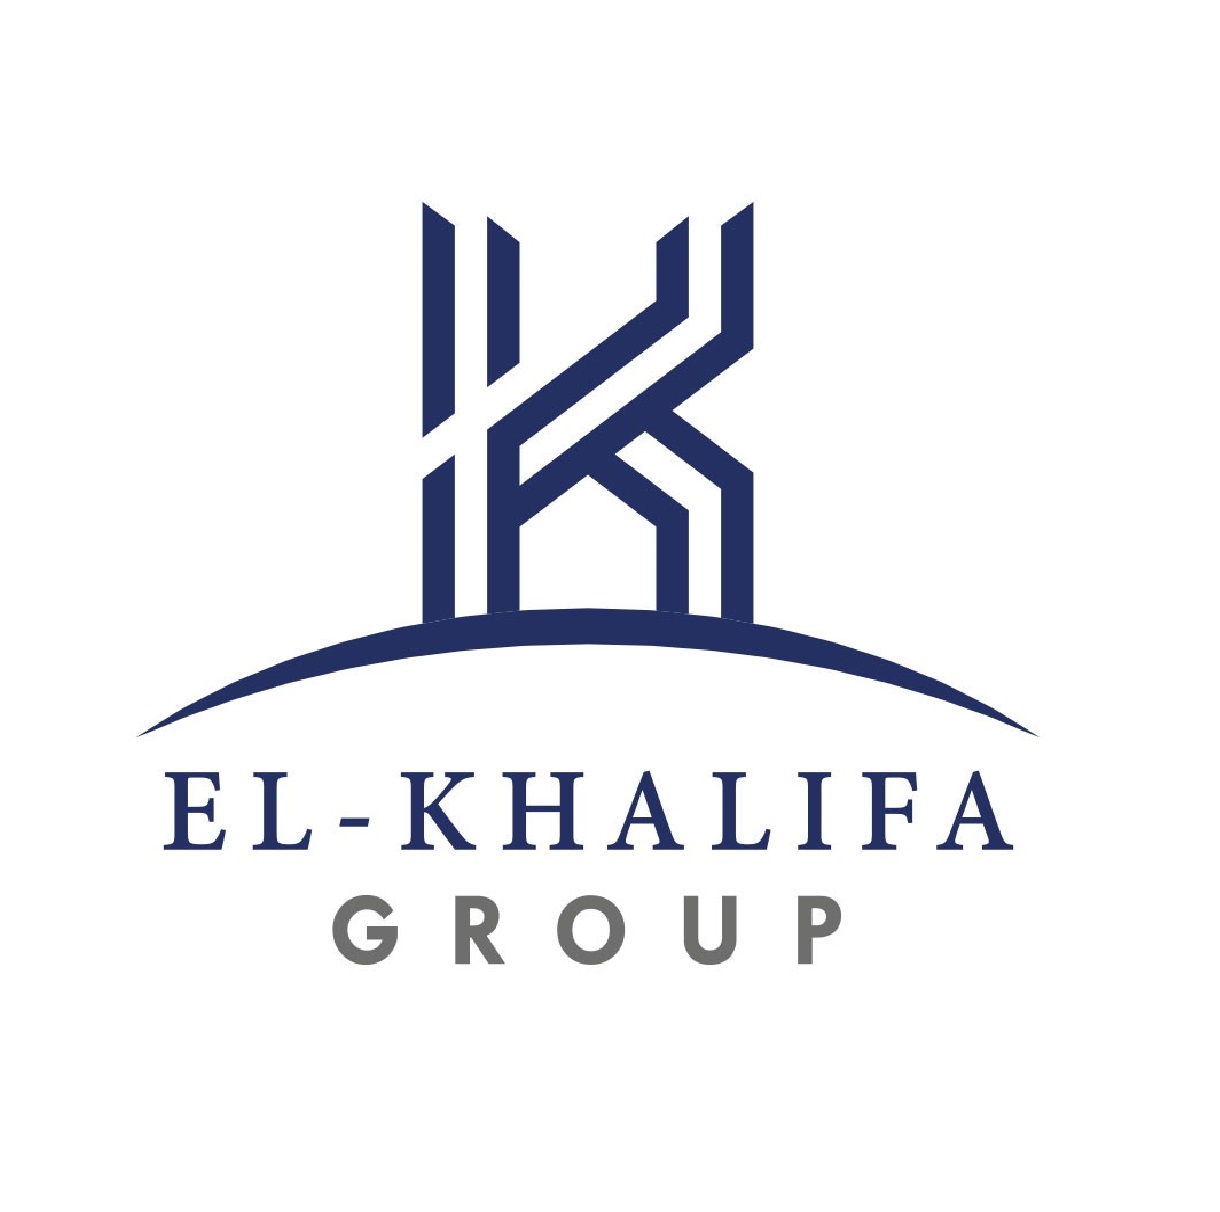 El-khalifa Group